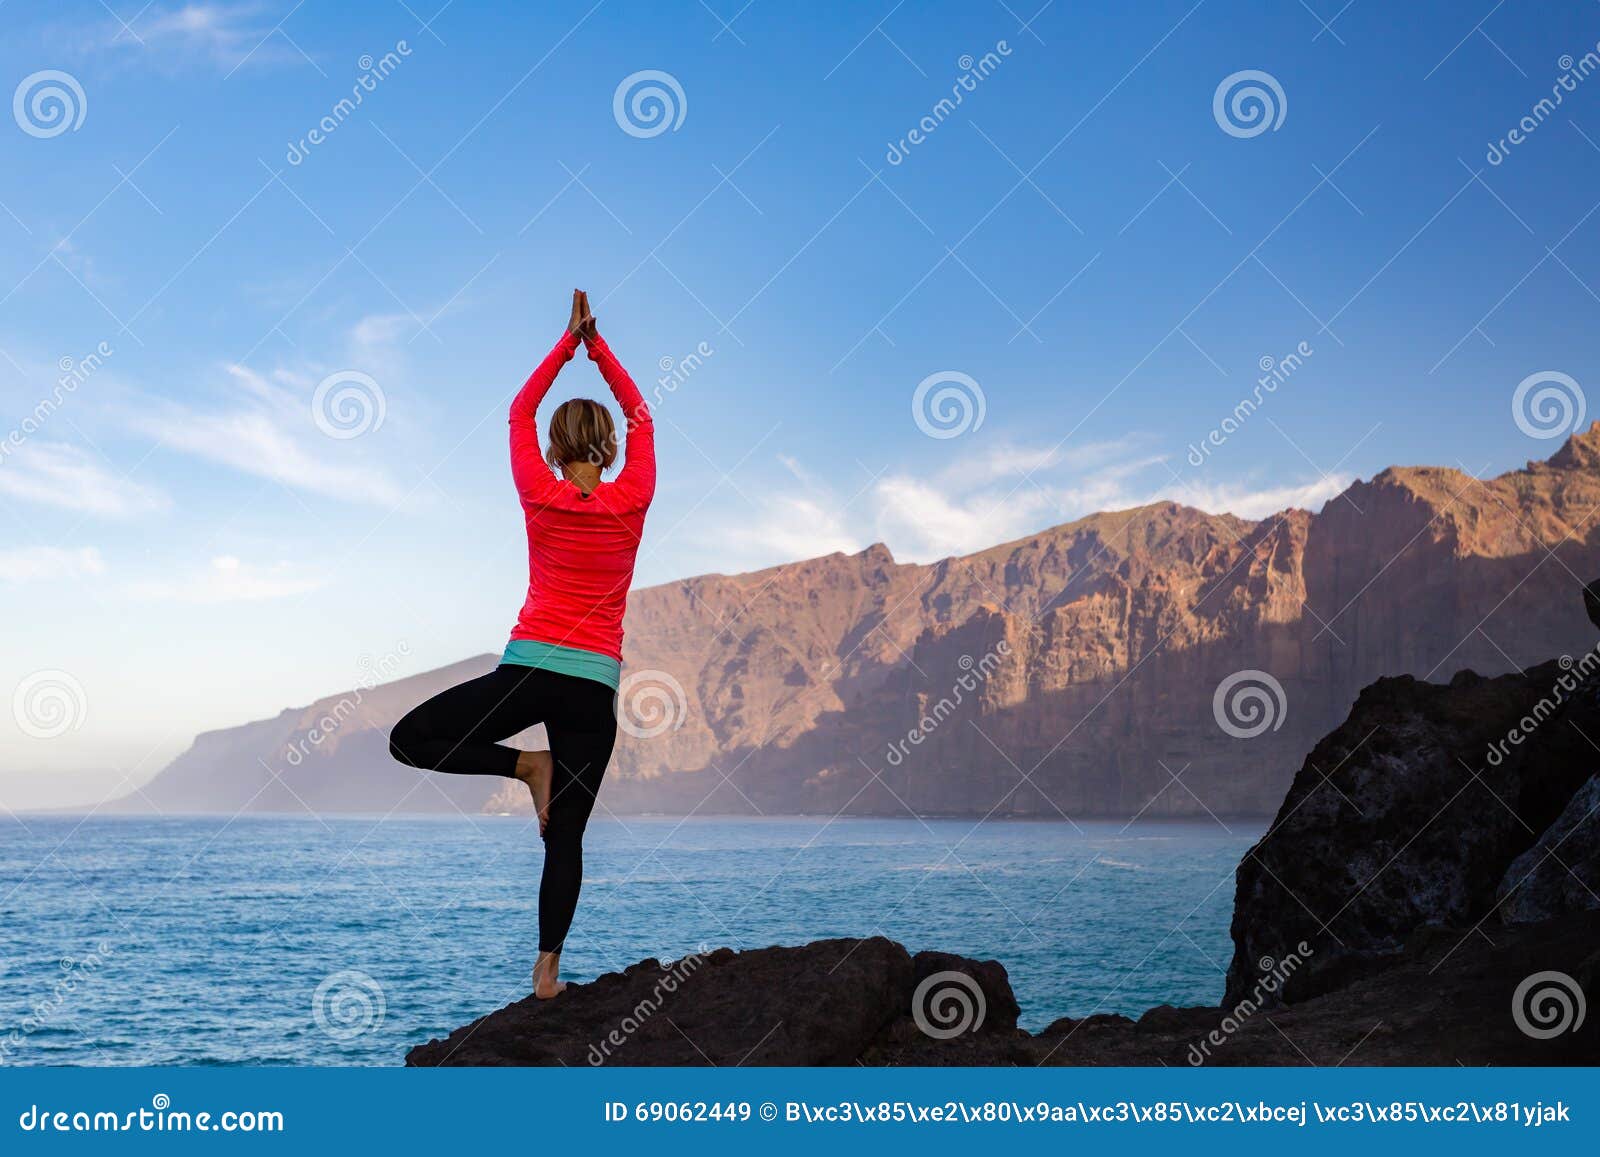 1,116 Yoga Vrksasana Stock Photos - Free & Royalty-Free Stock Photos from  Dreamstime